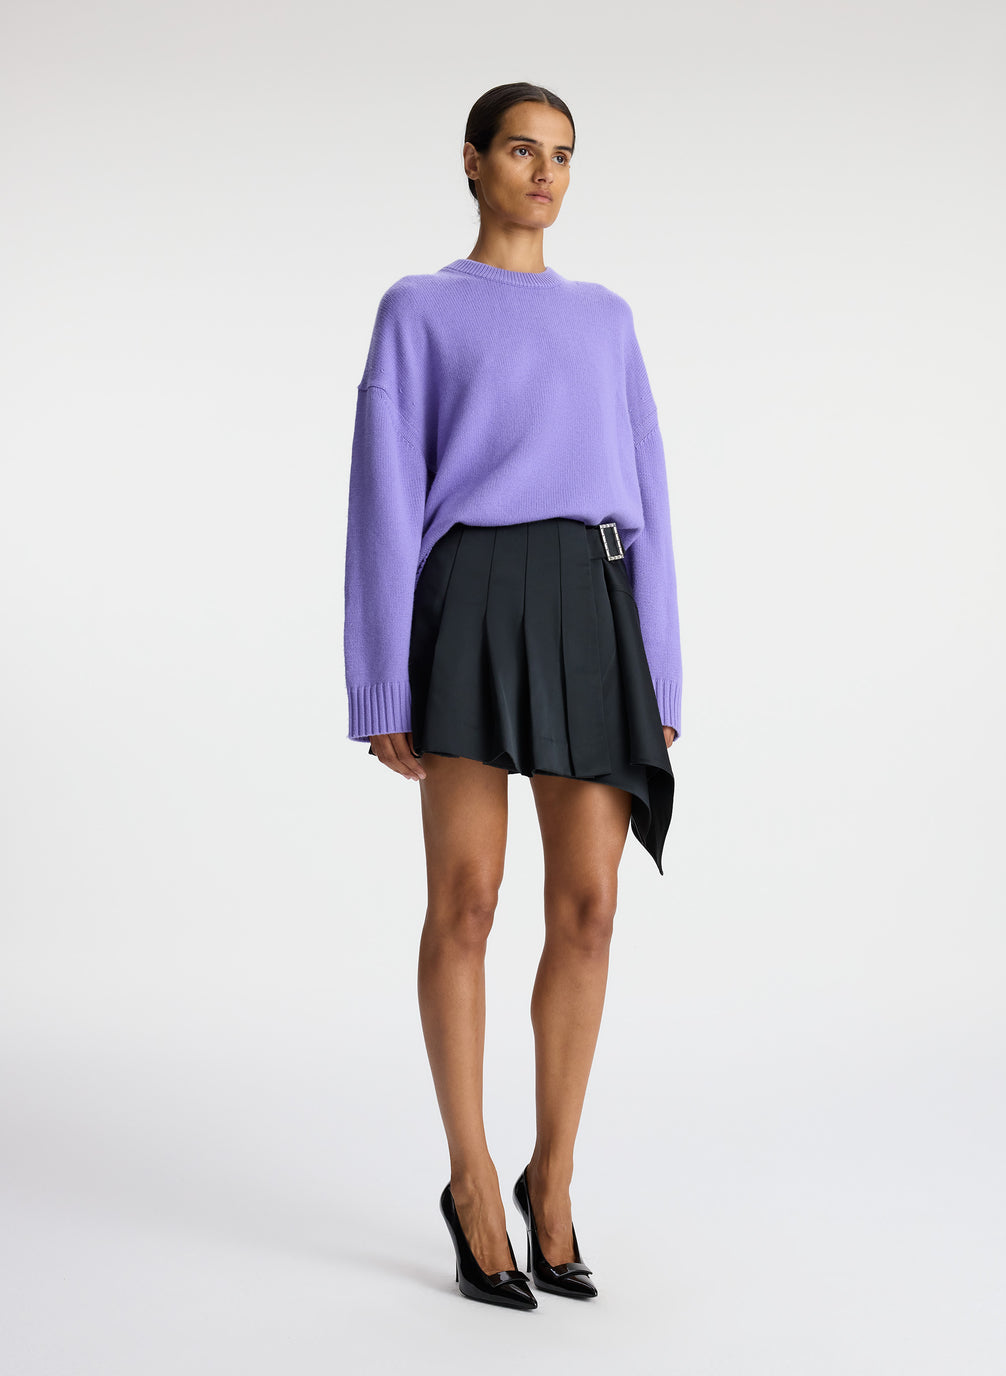 side view of woman wearing light purple cashmere long sleeve sweater